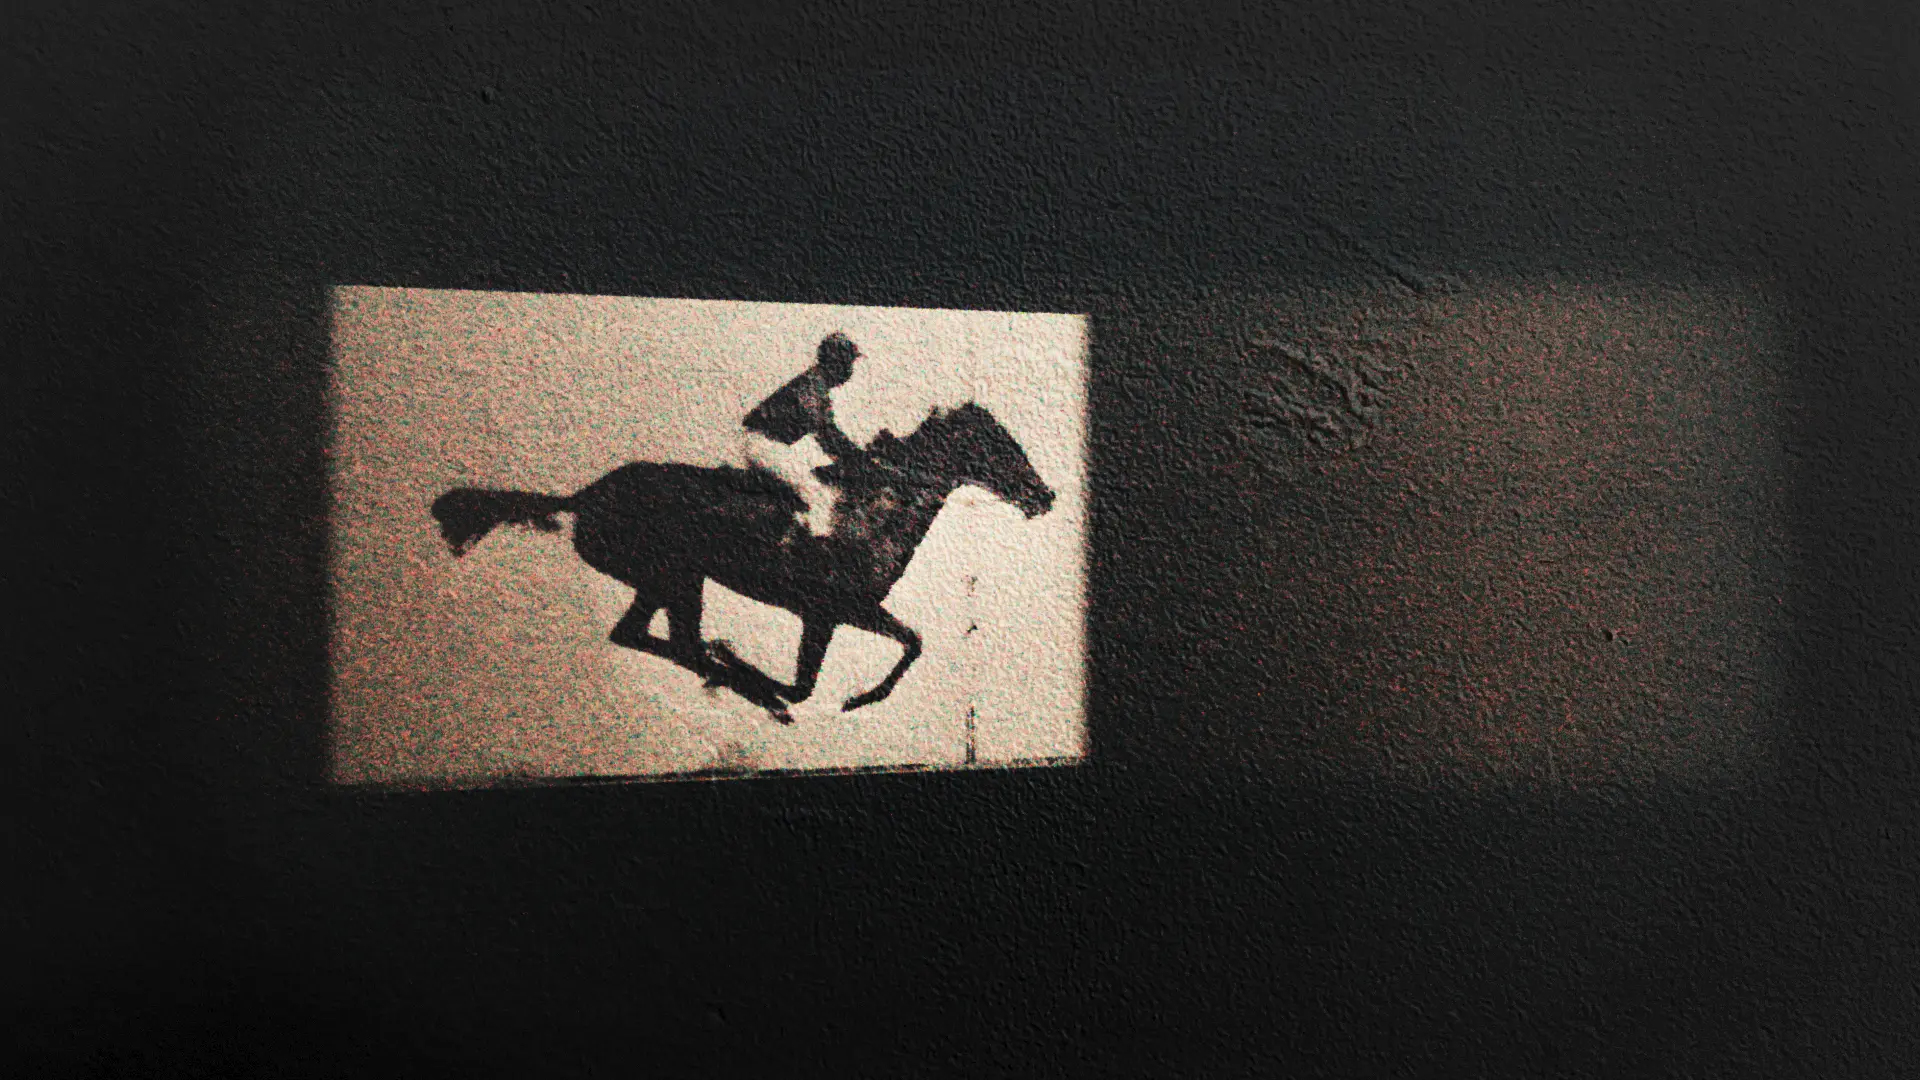 Still frame from Horse animation